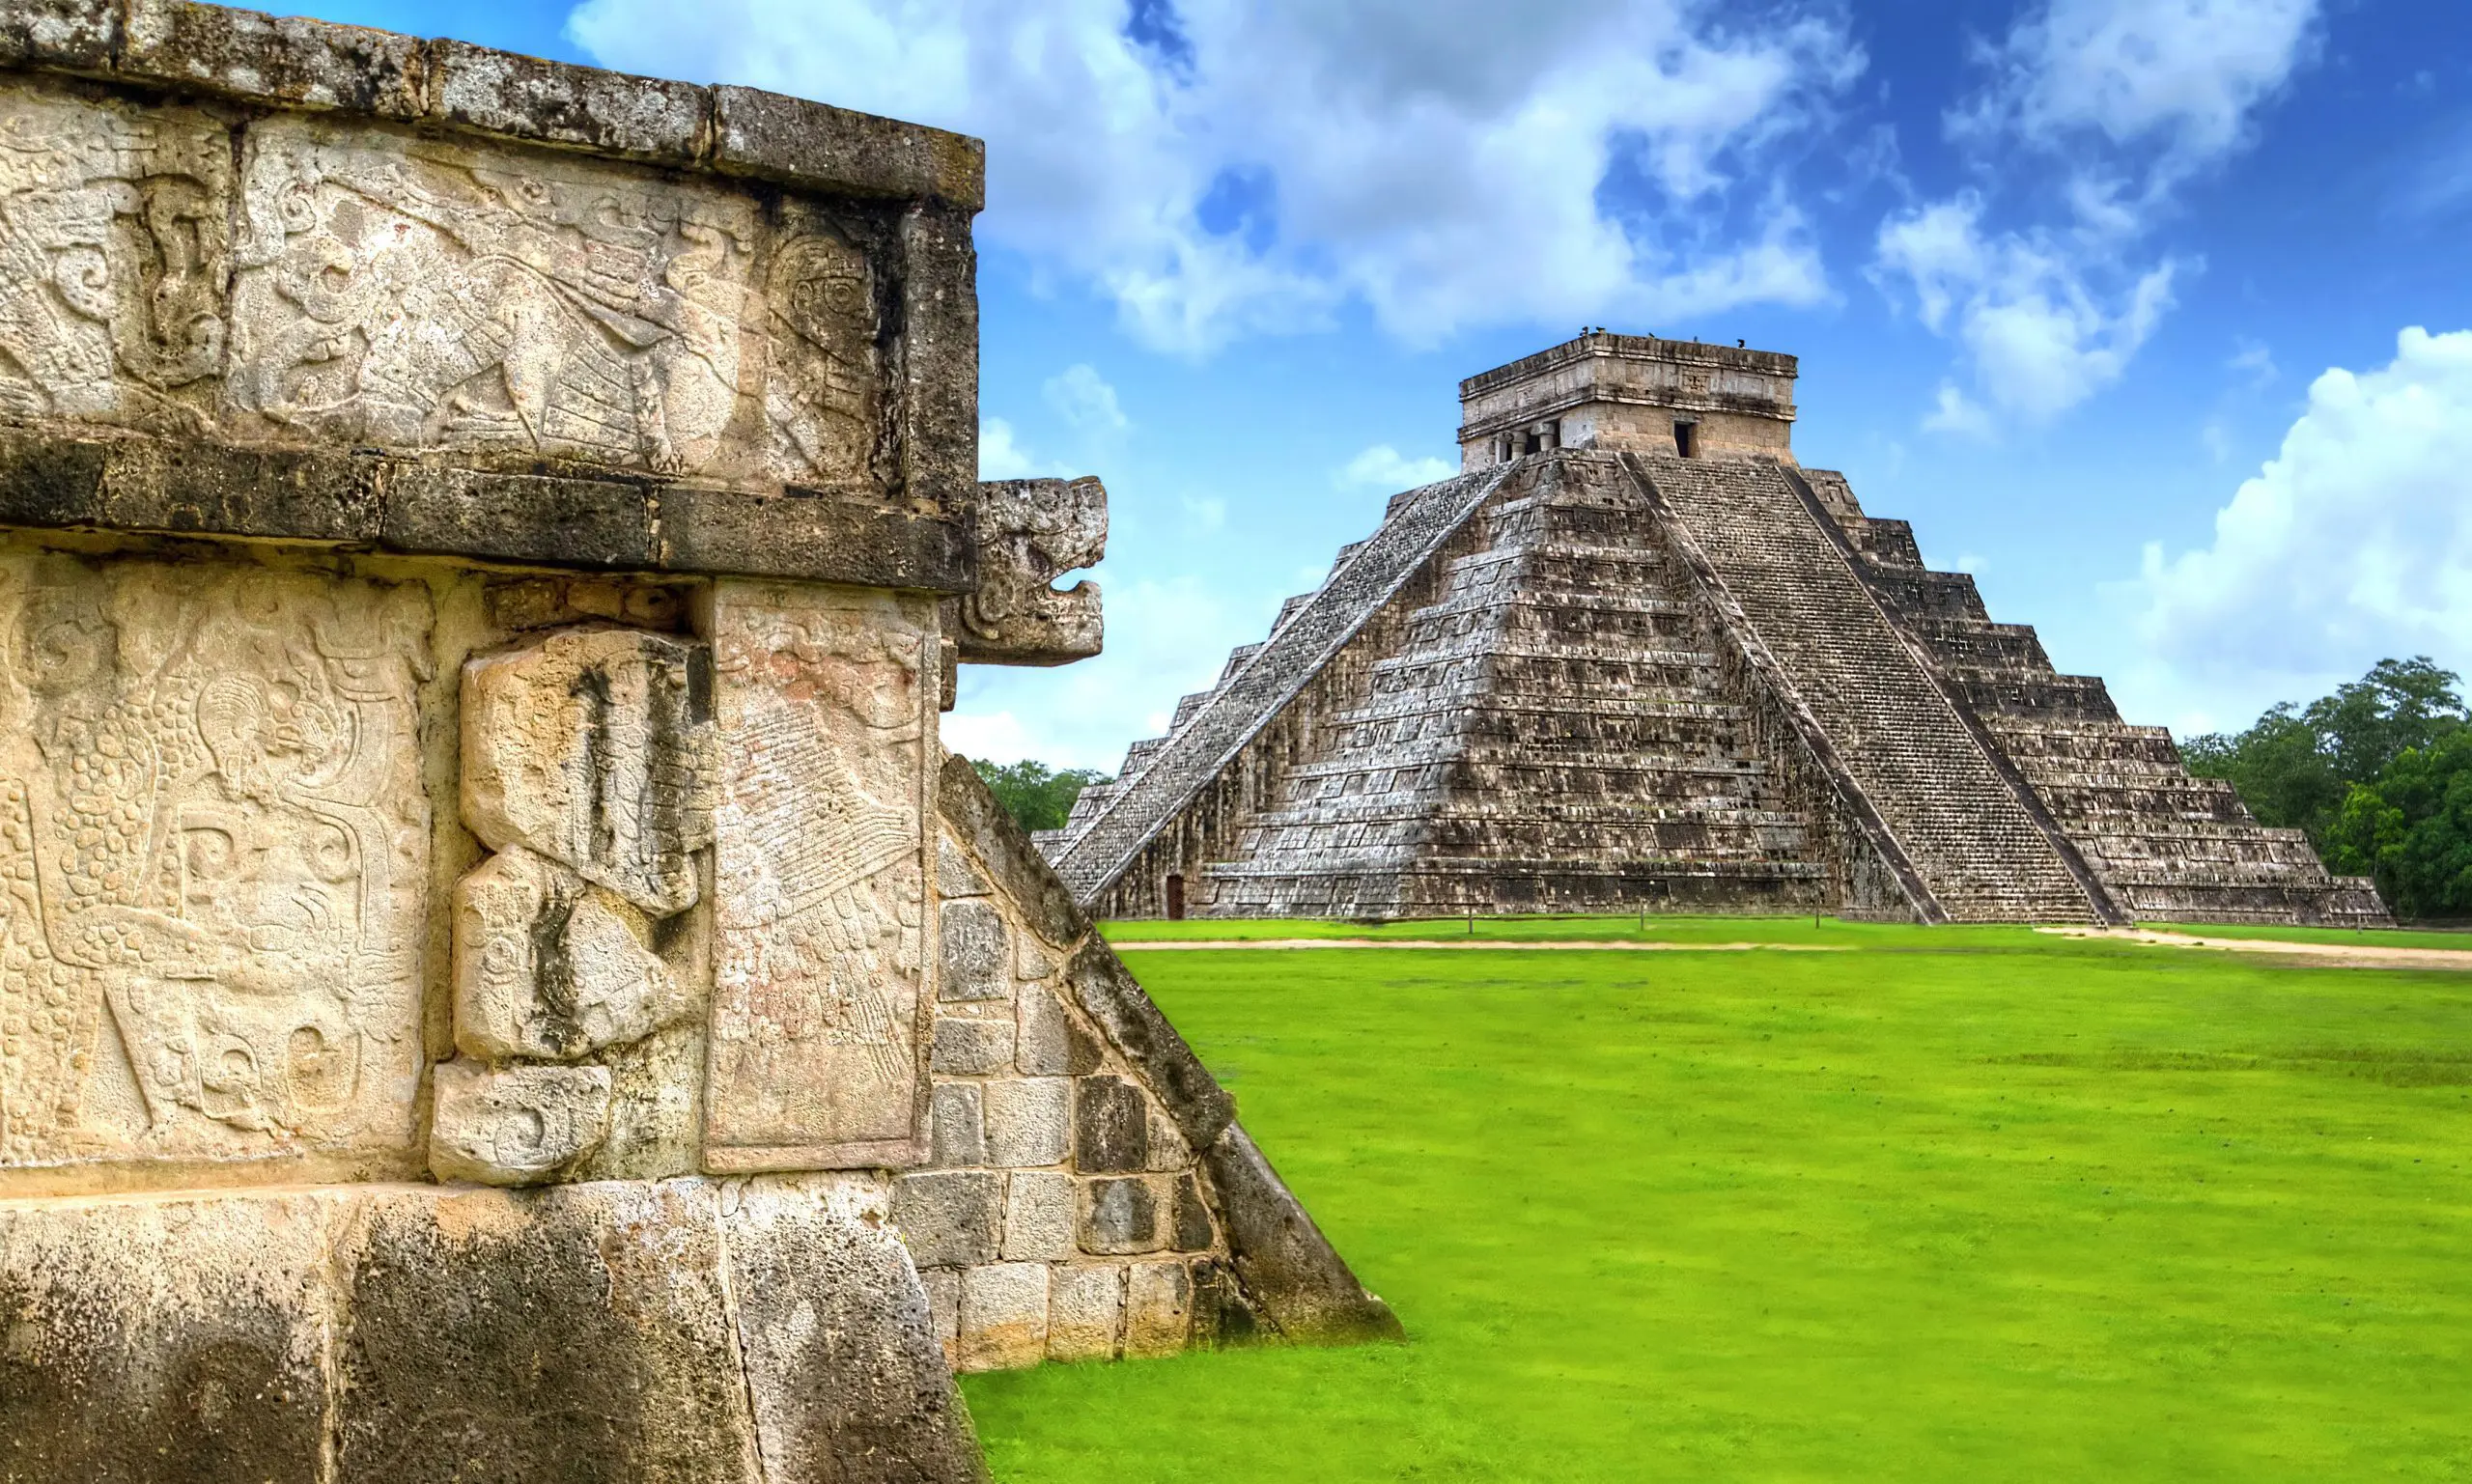 Is Chichén Itzá Safe to Visit